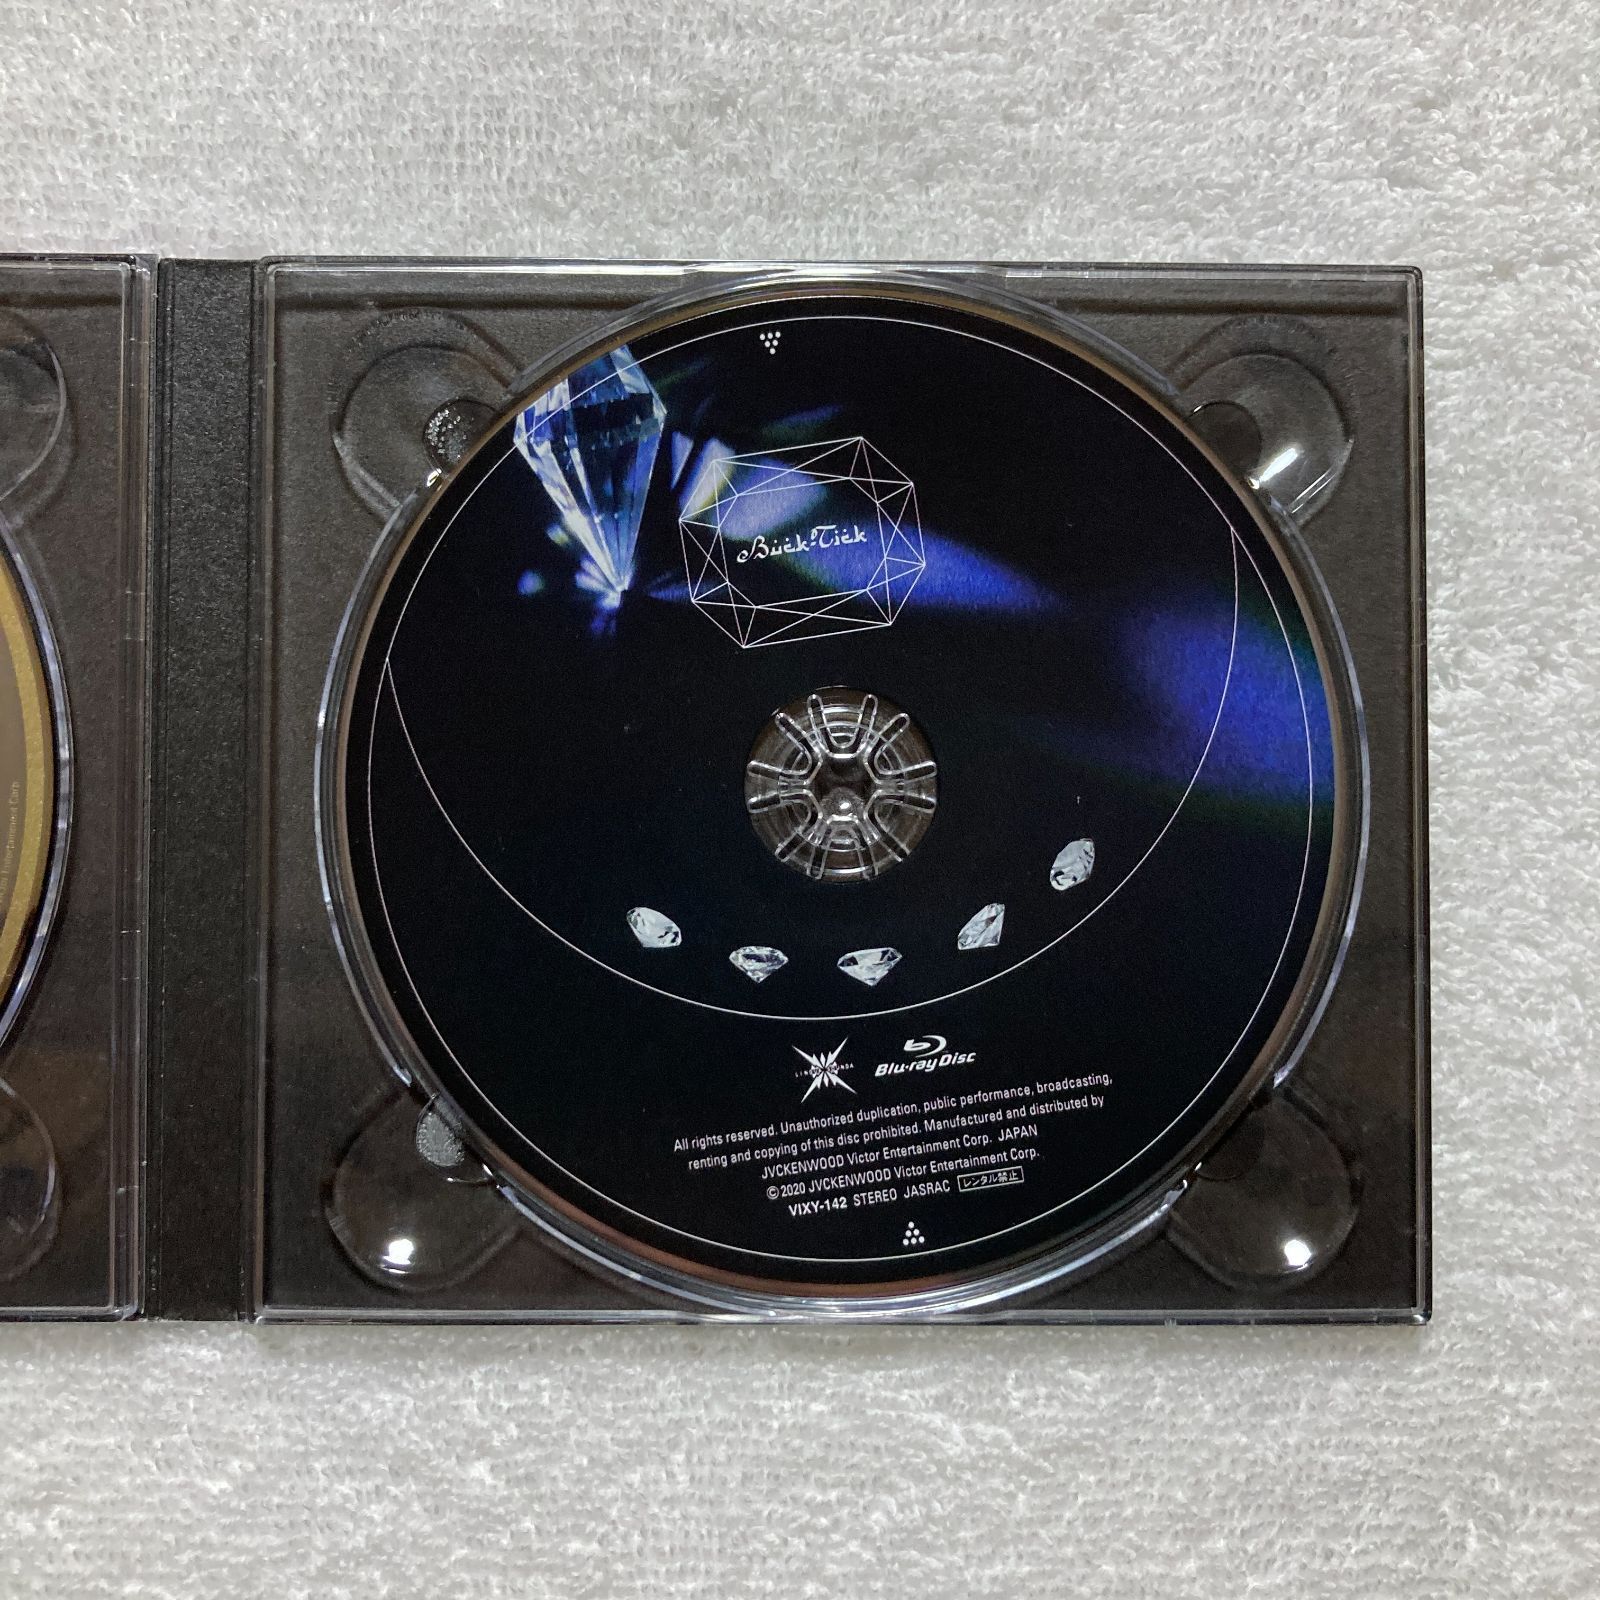 CD】BUCK-TICK バクチク / ABRACADABRA アブラカタブラ [完全生産限定